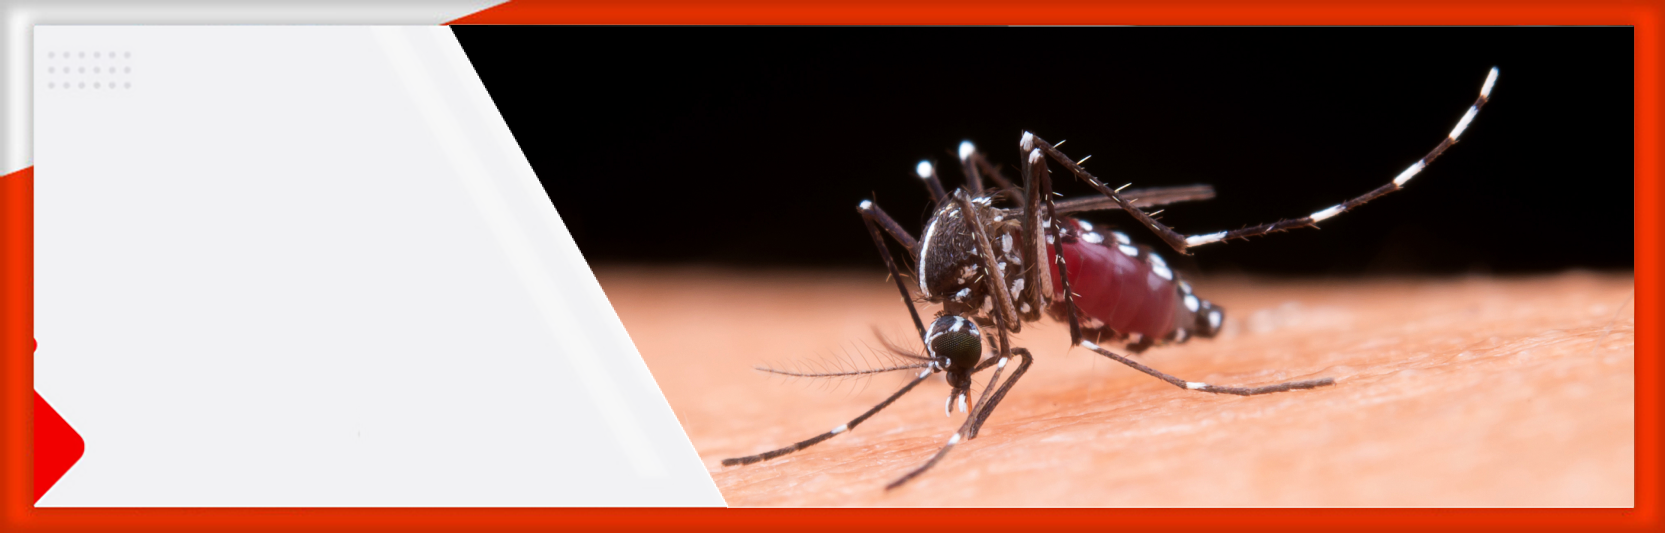 Siap Hadapi Resiko Demam Berdarah Dengue